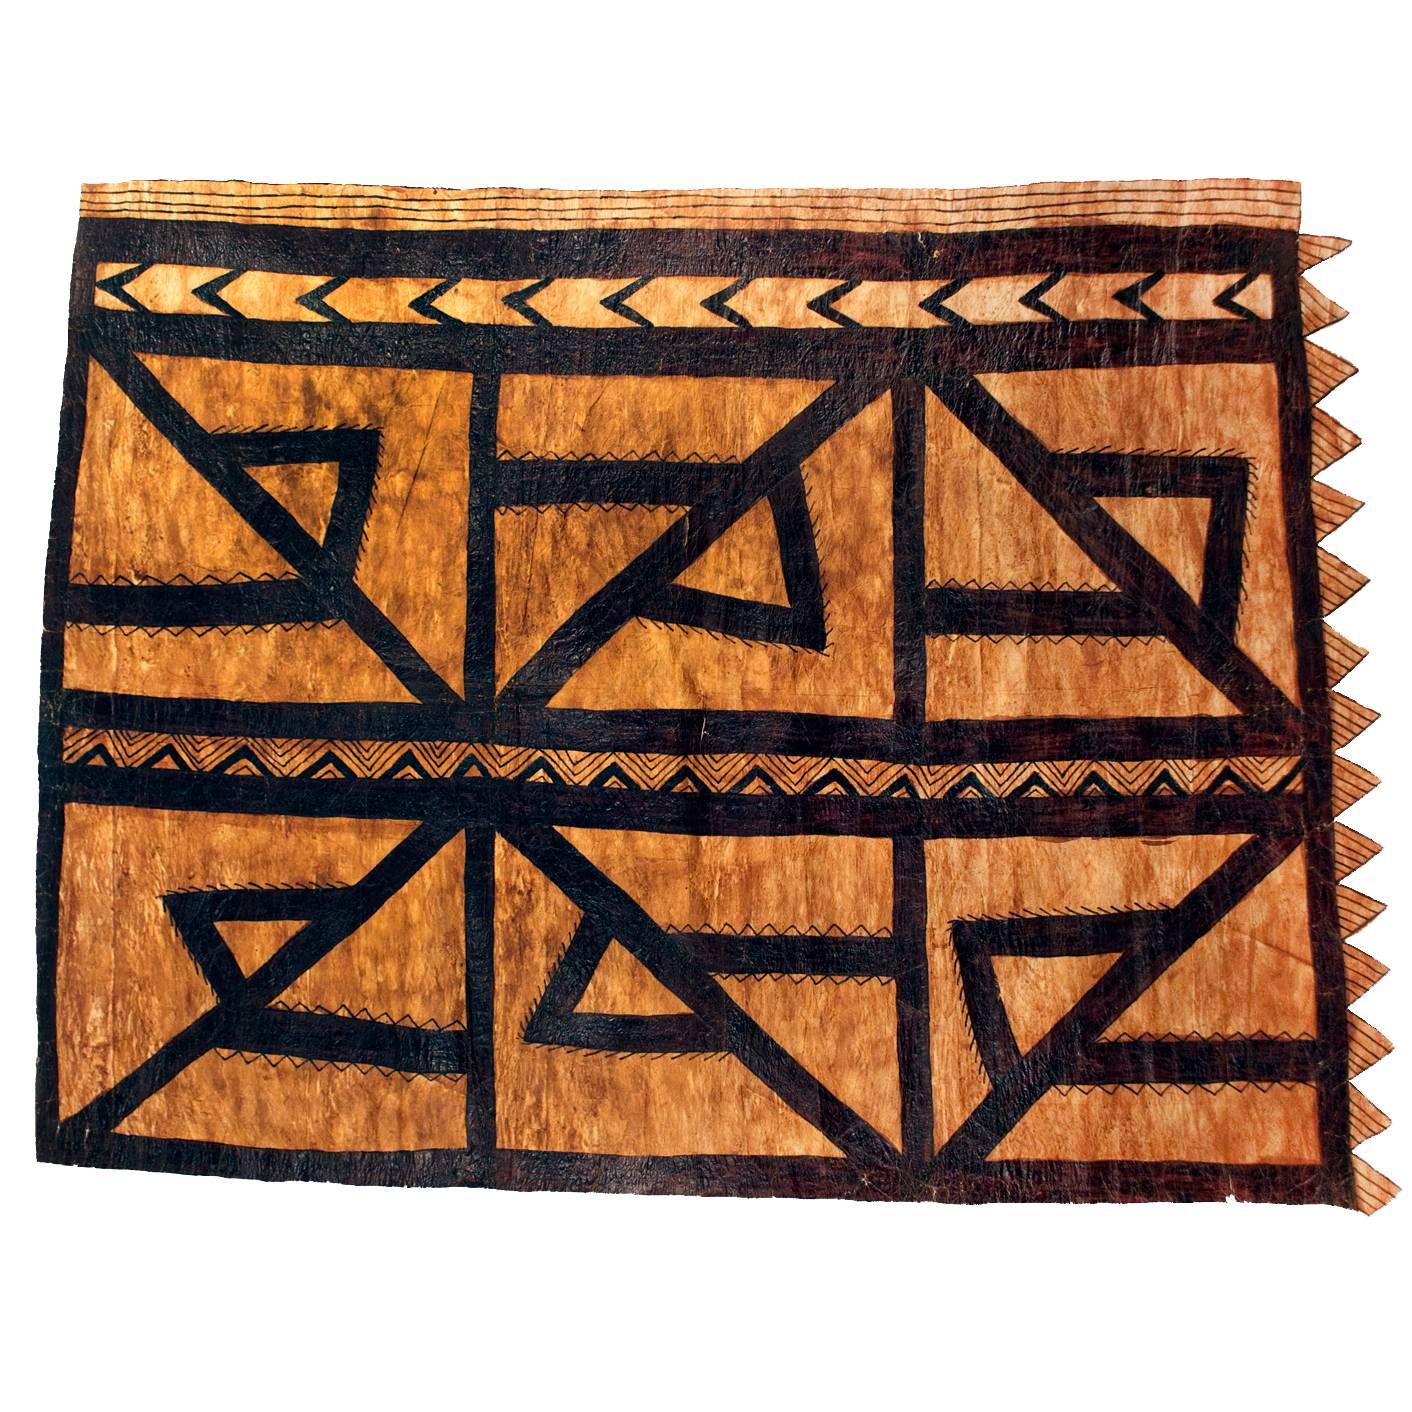 Early 20th Century Abstract Tapa Cloth from Western Samoa